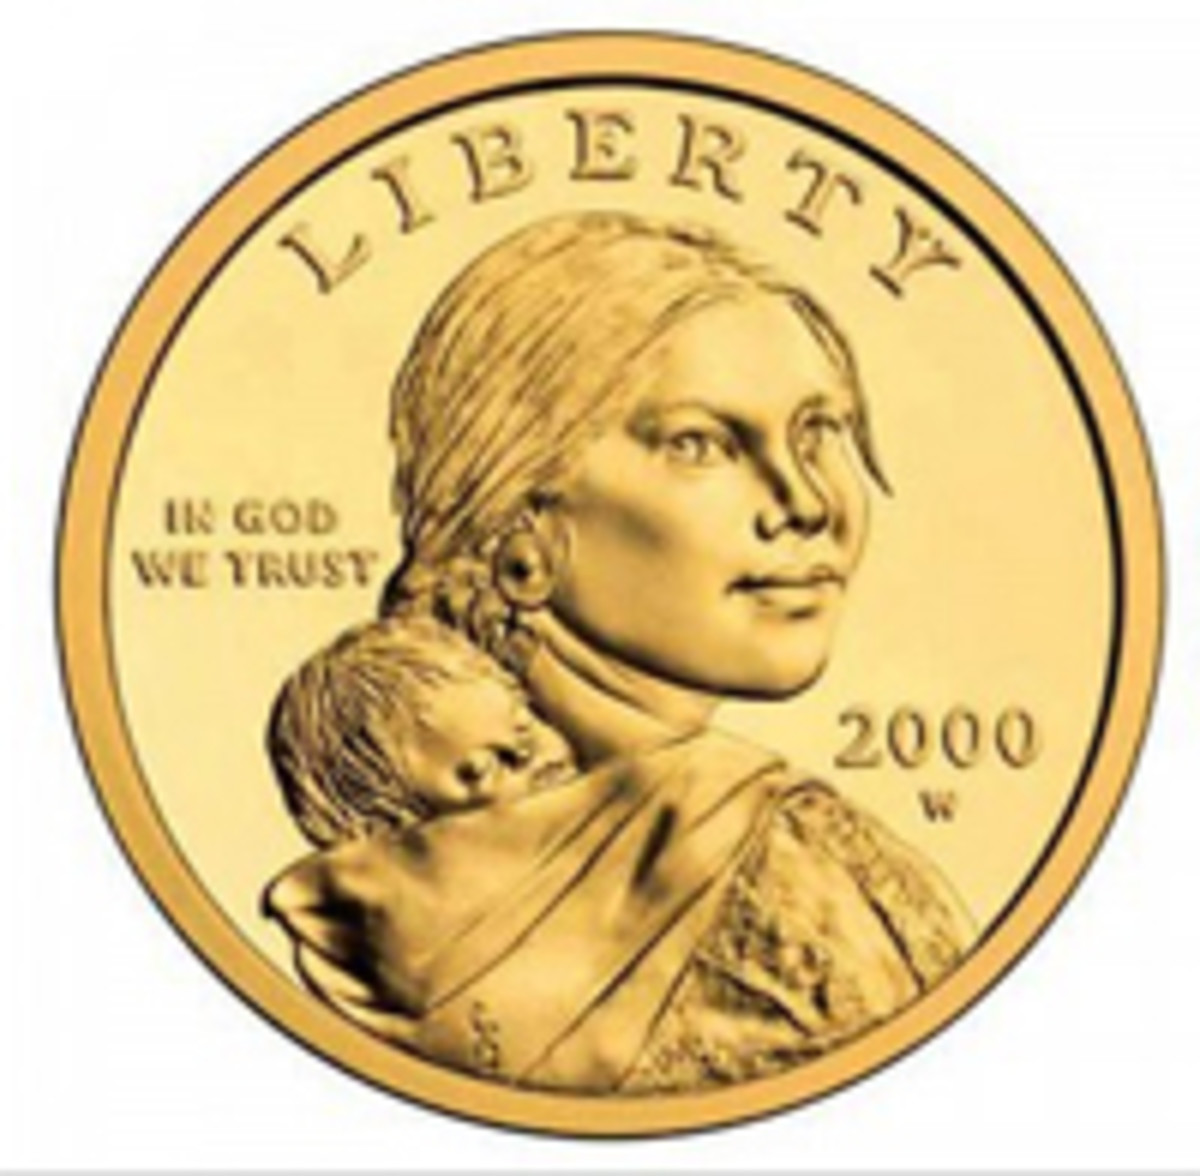  Base metal Sacagawea dollar coin. (Image courtesy www.usacoinbook.com)